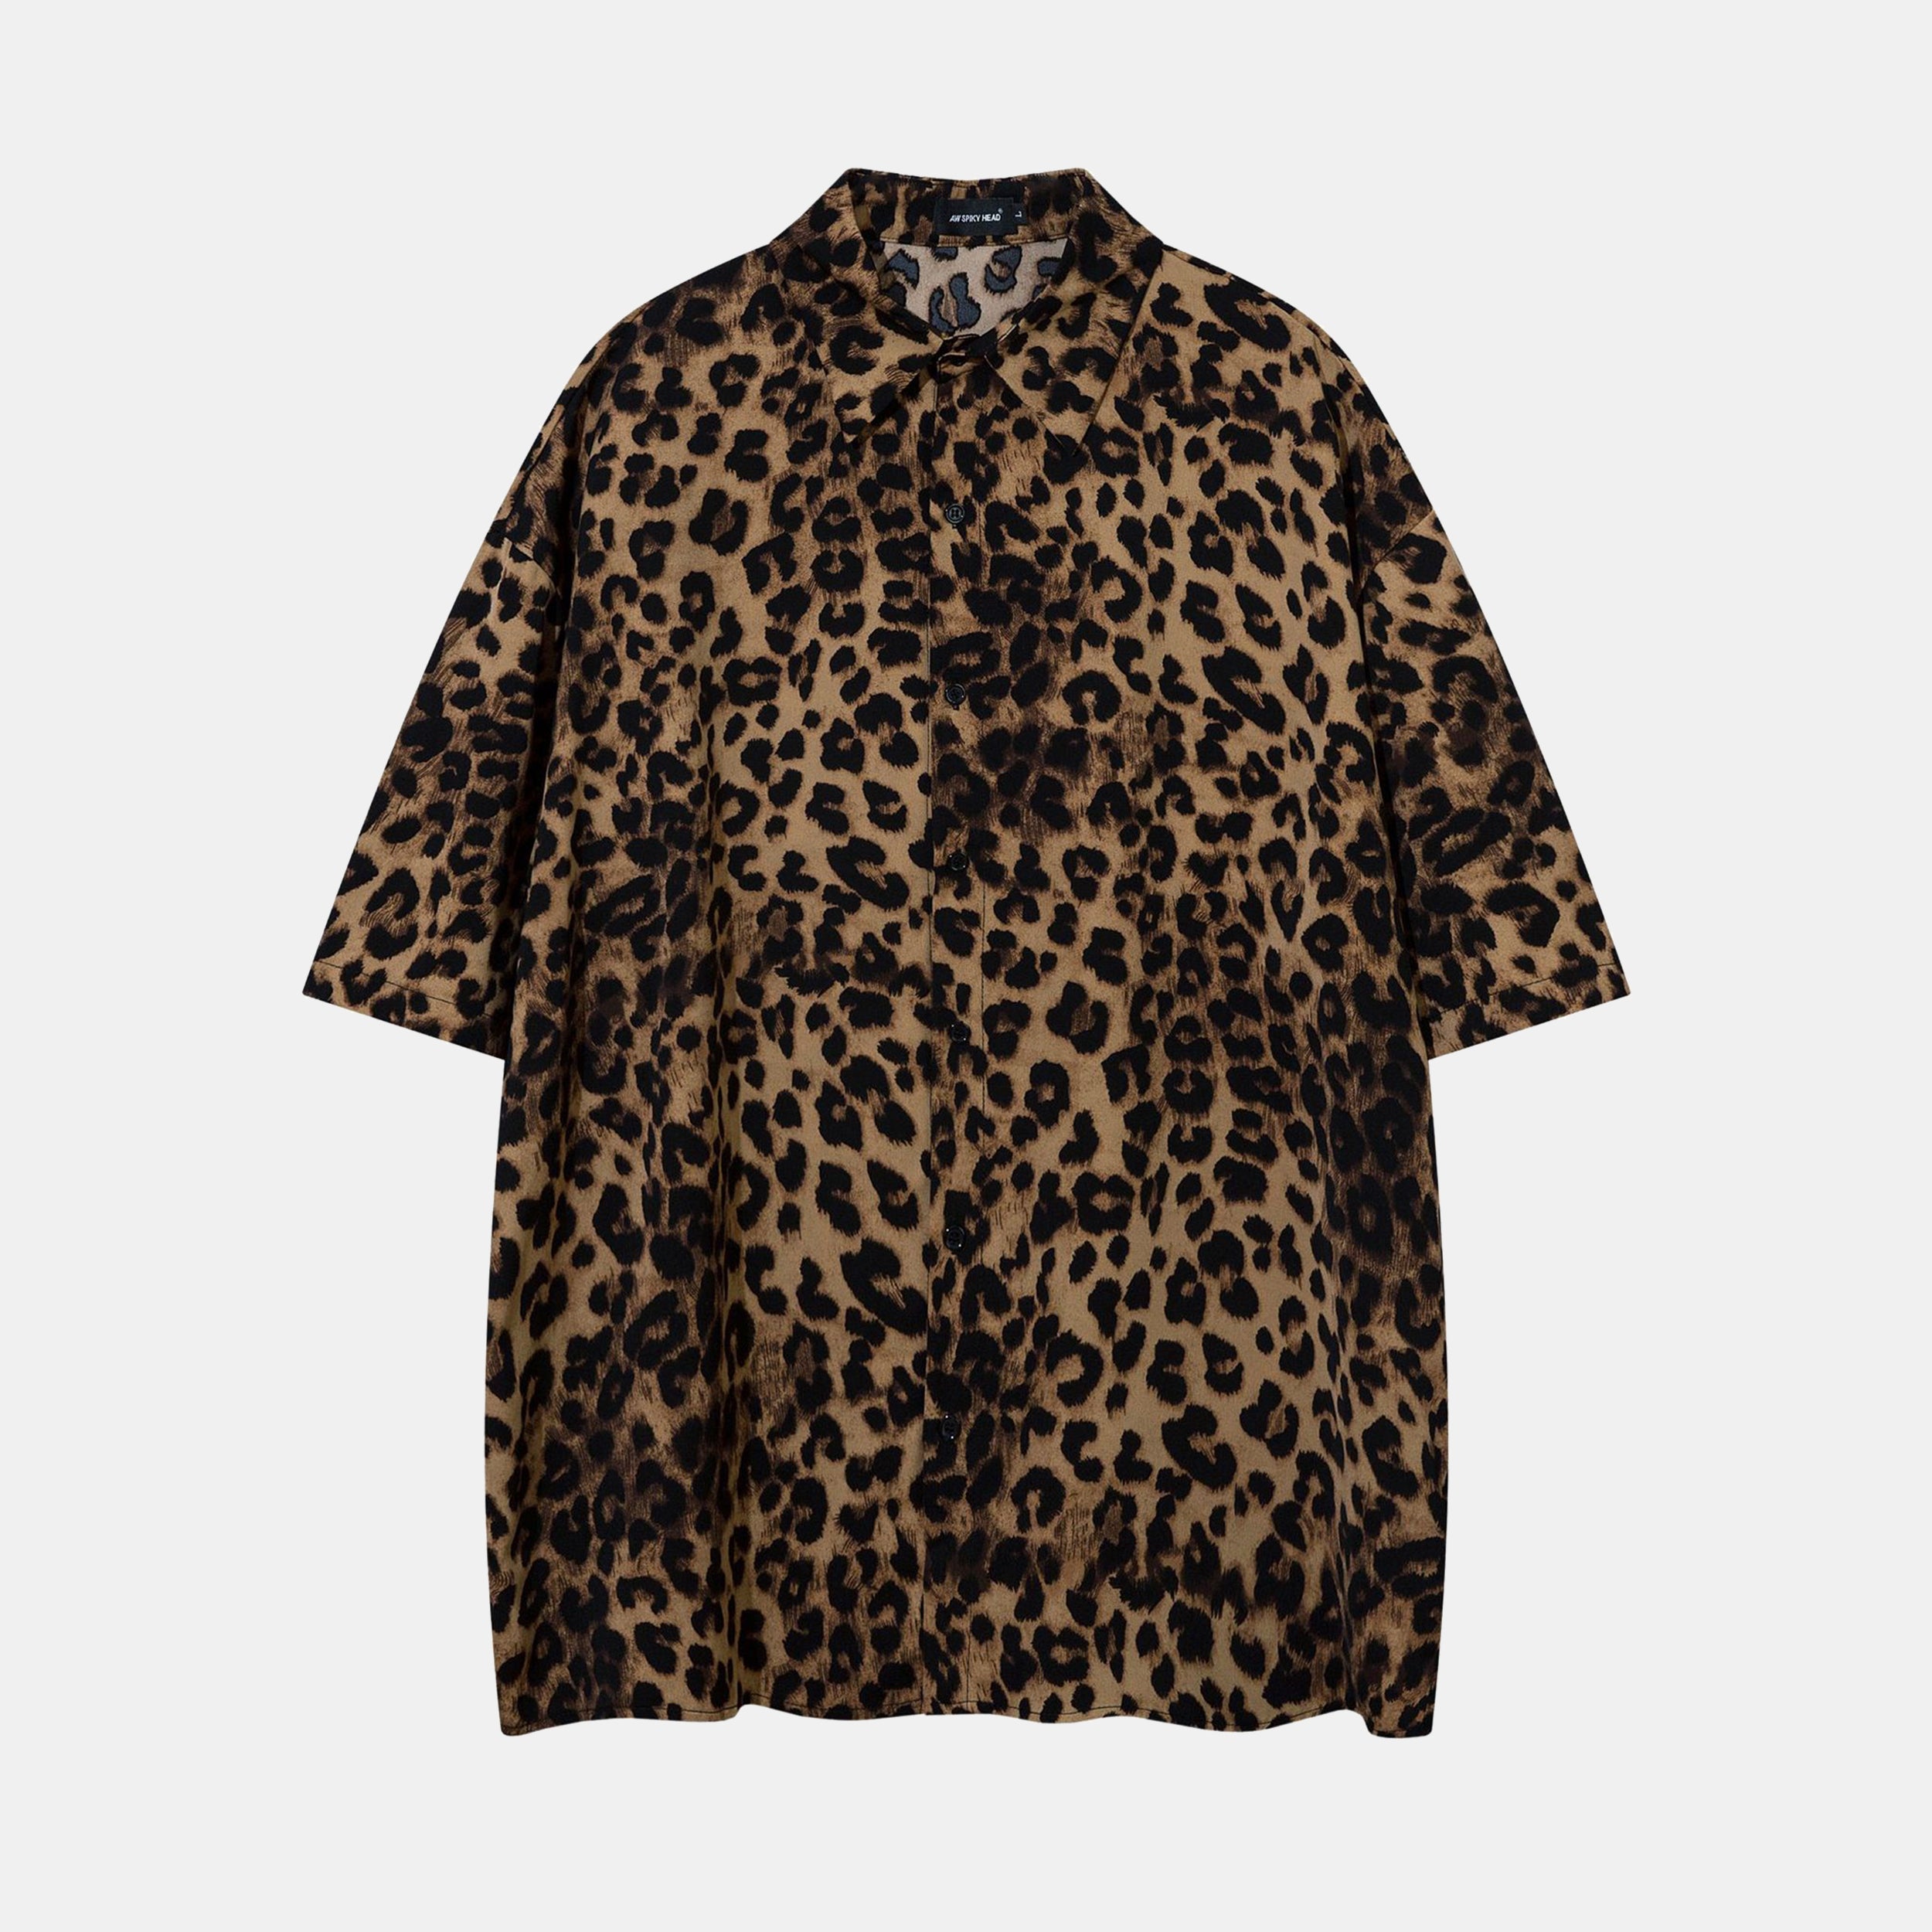 "Leopard Print Short Sleeve" T Shirt - Santo 